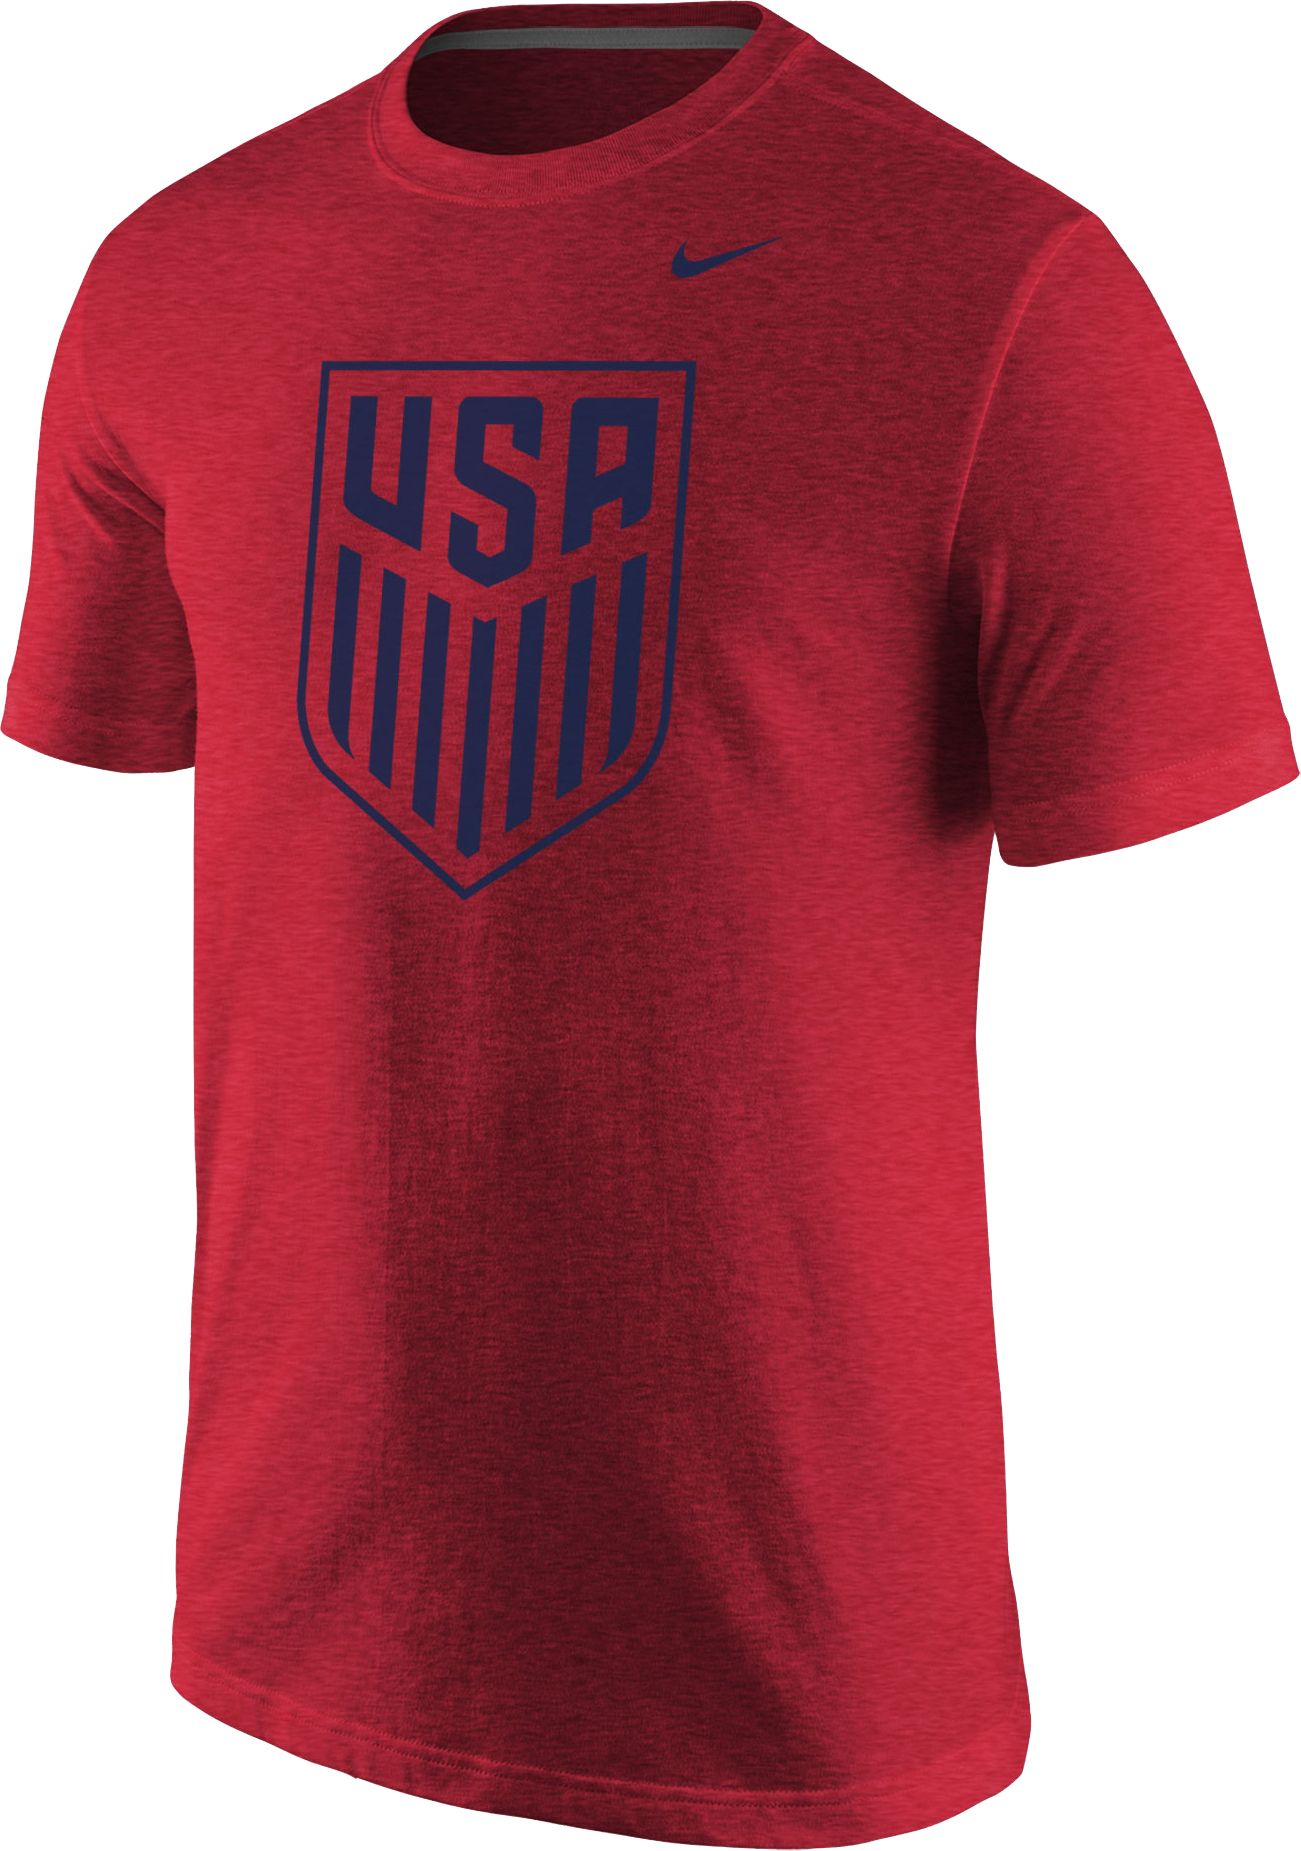 USA Shirts & Jerseys | DICK'S Sporting Goods